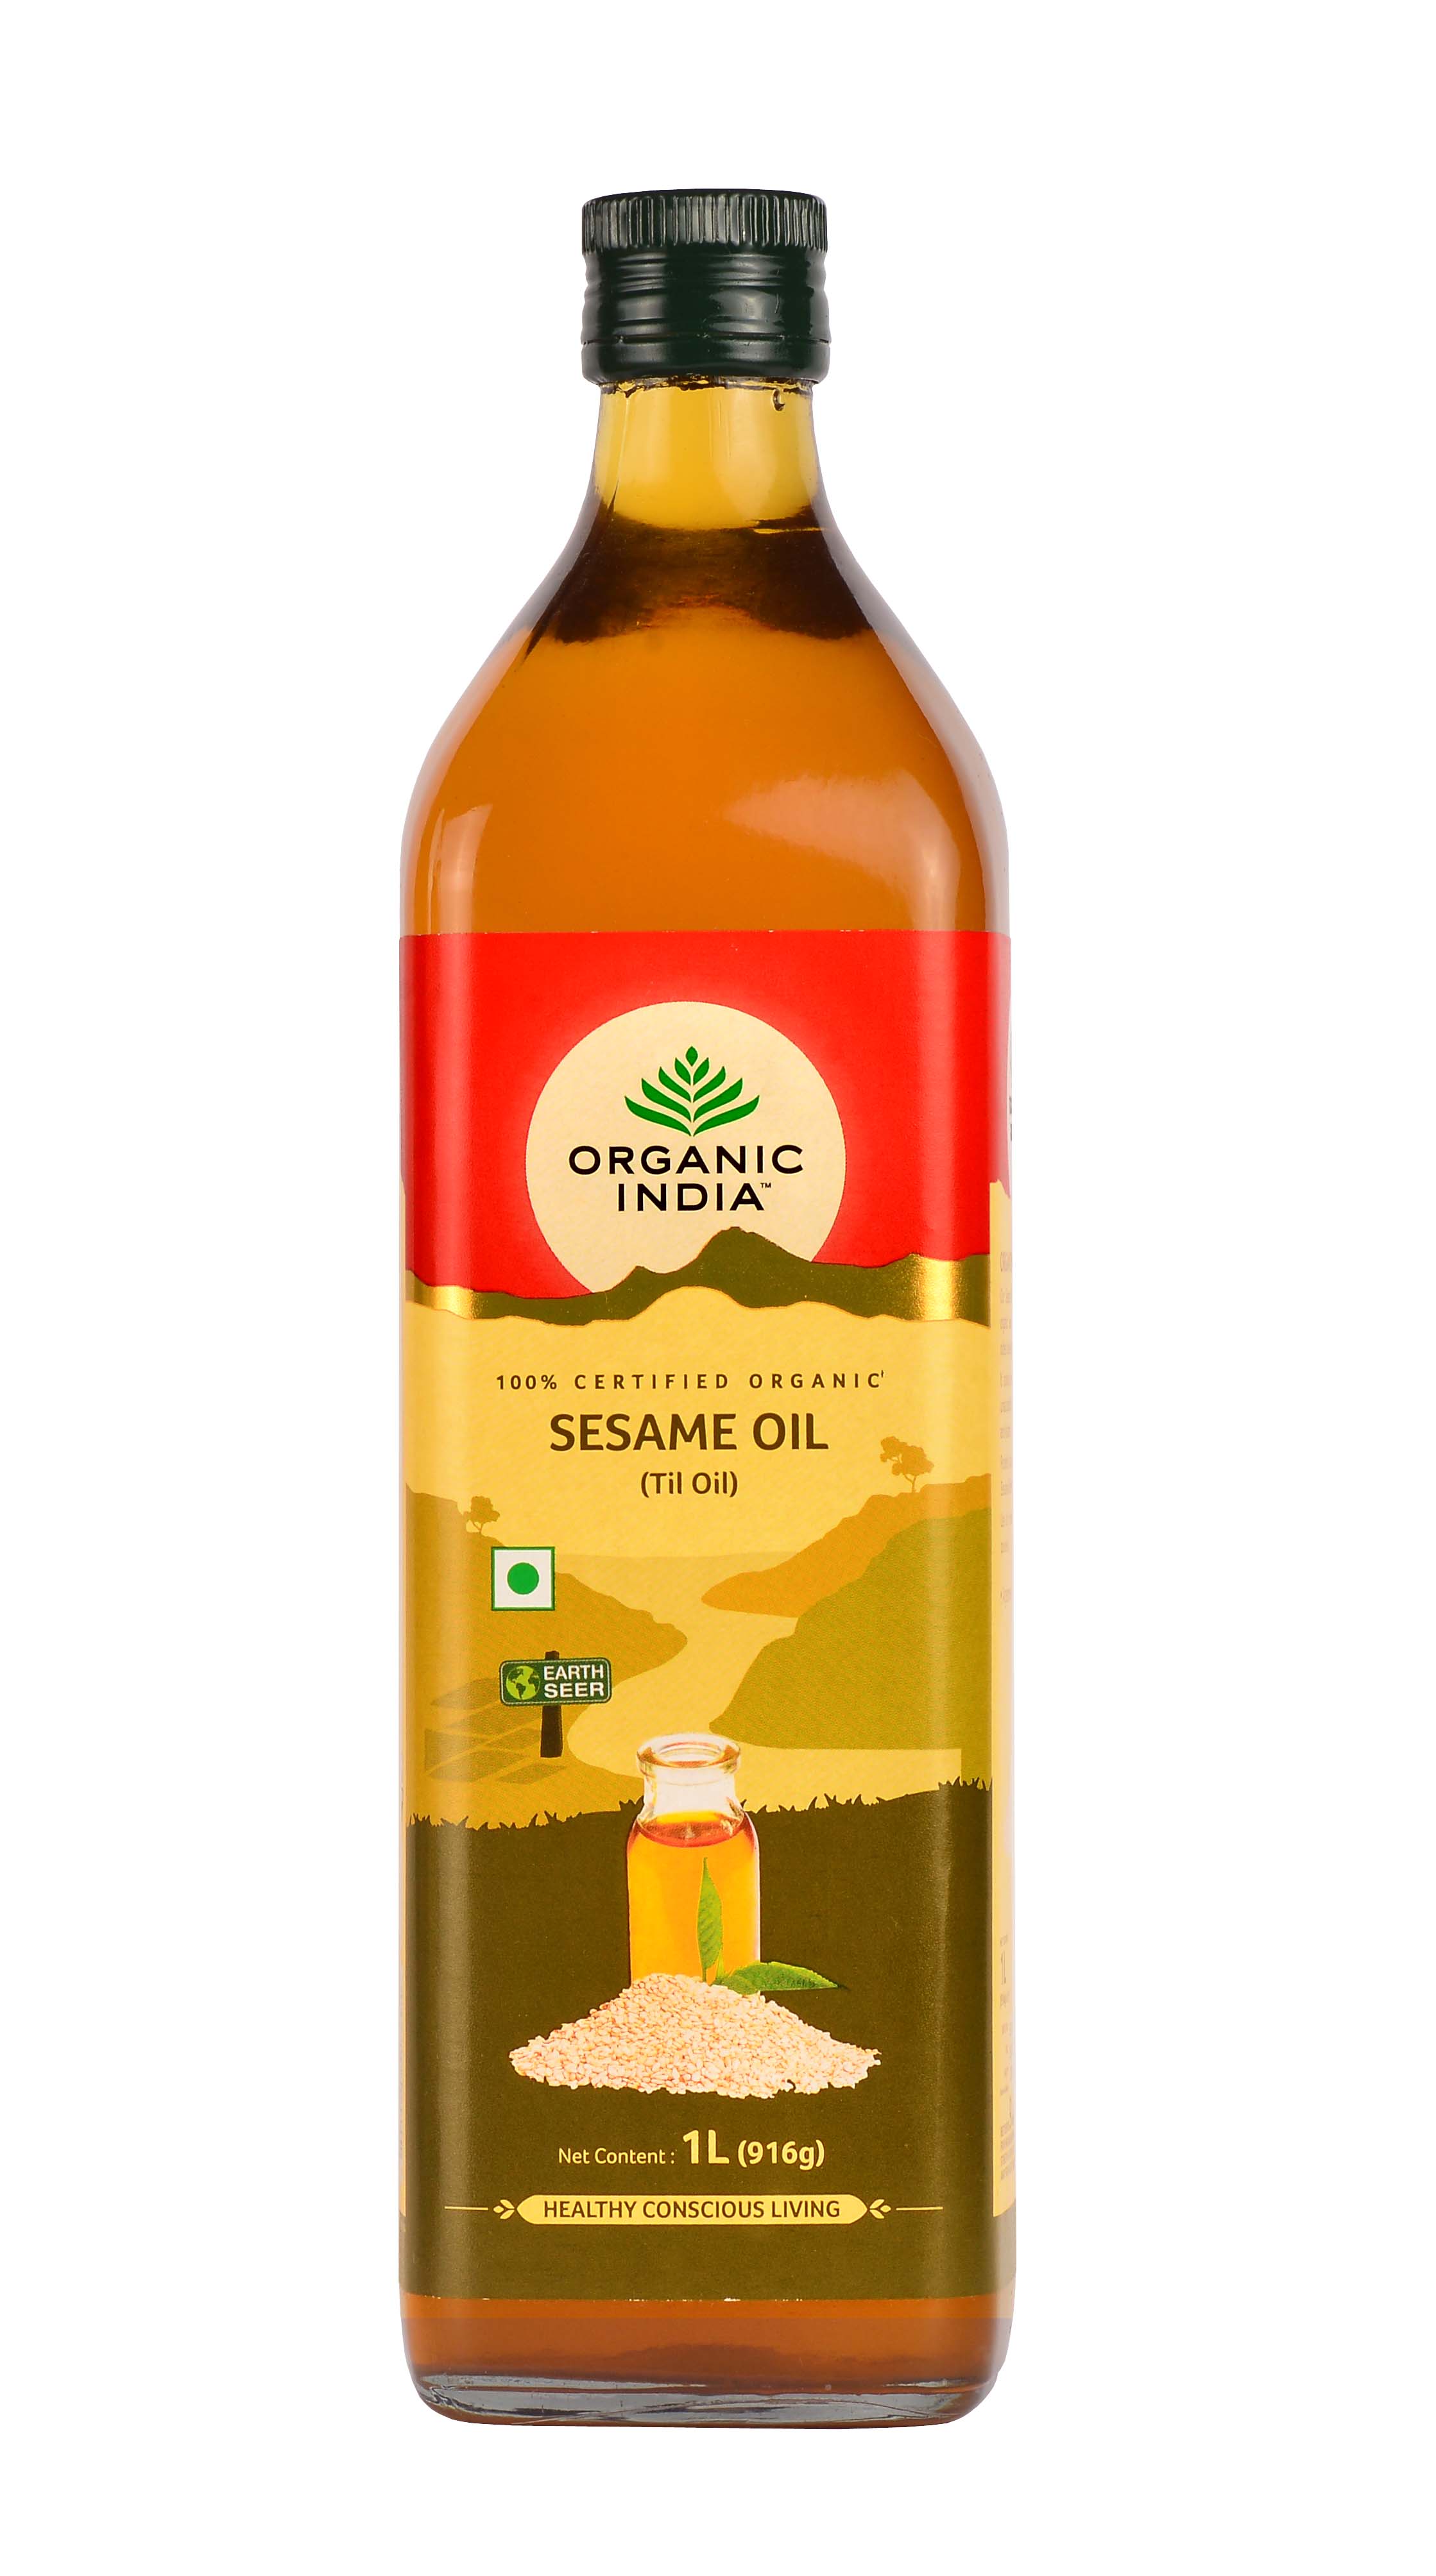 Buy Organic India Sesame Oil at Best Price Online